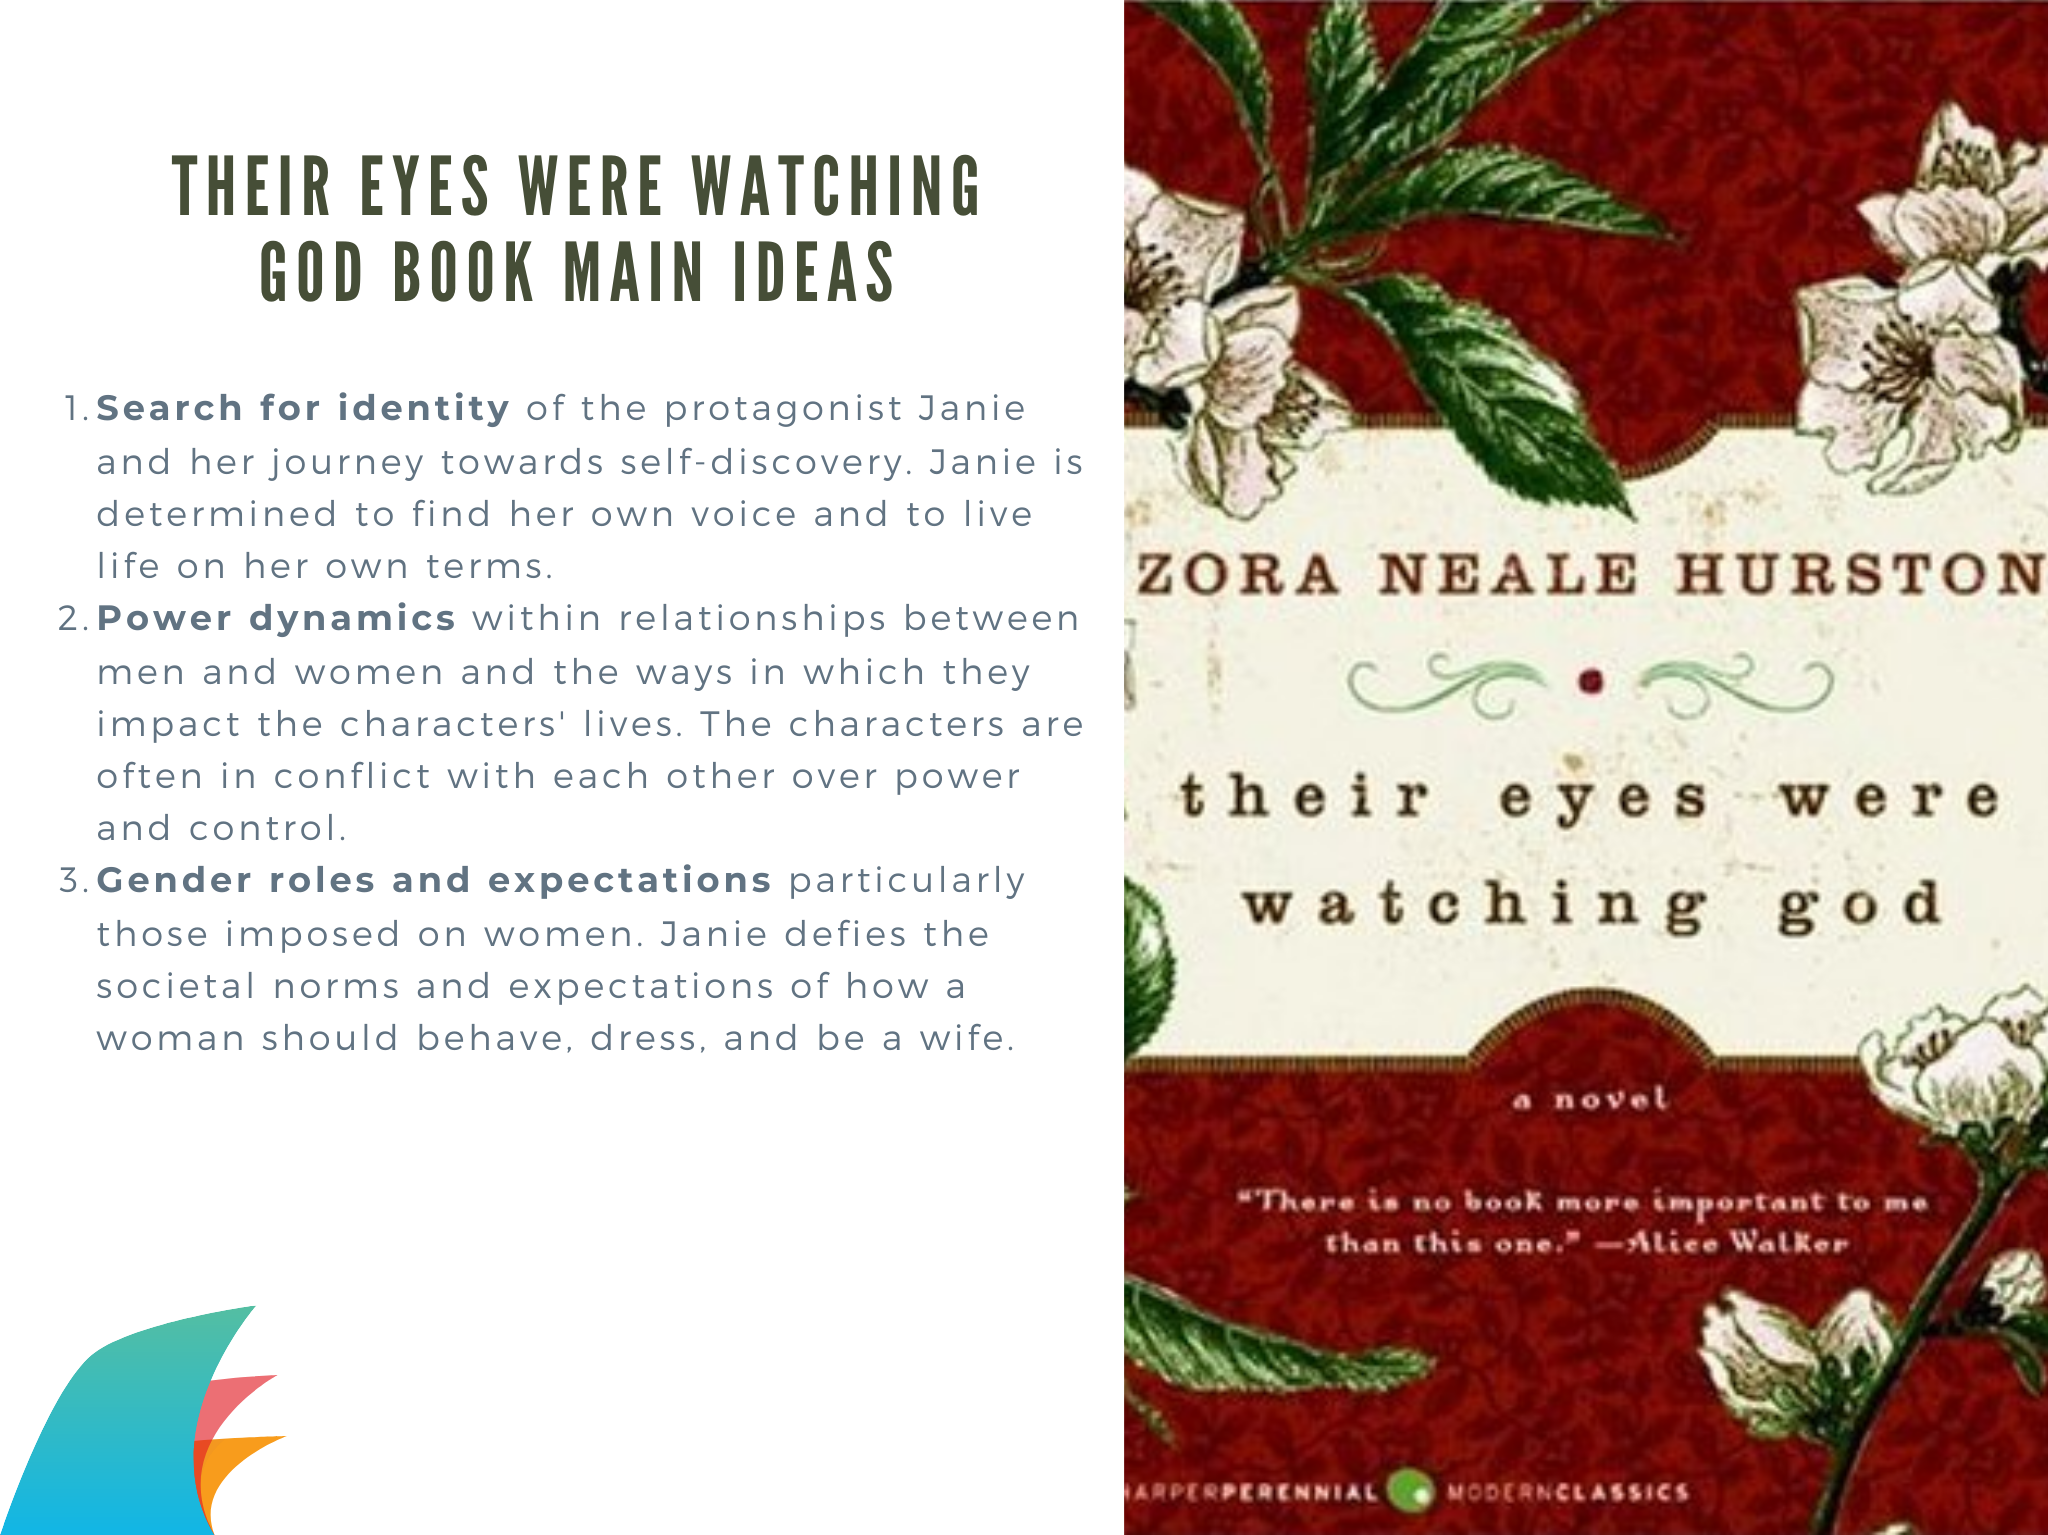 Their Eyes Were Watching God book ideas